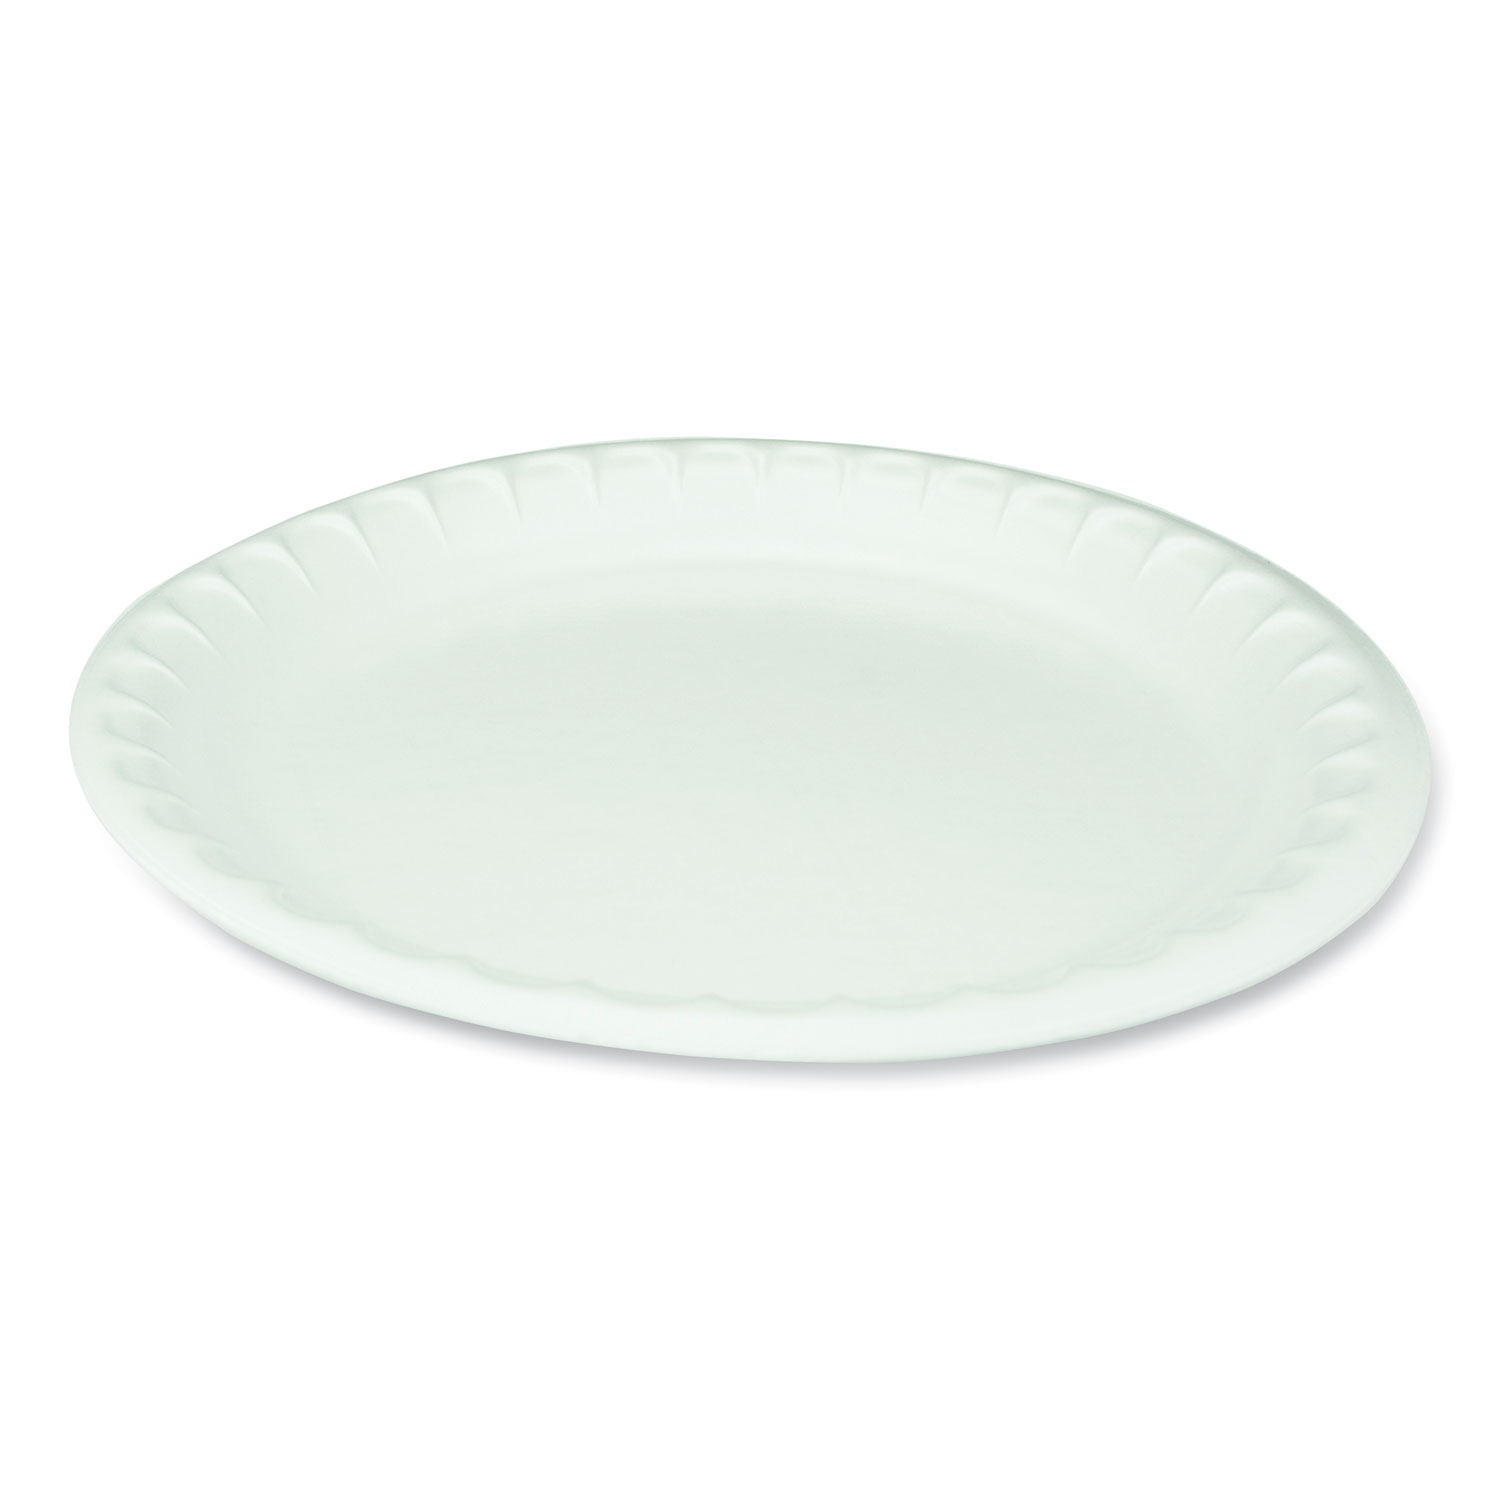  Pactiv 0TK10010000Y Laminated Foam Dinnerware, Plate, 10.25 Diameter, White, 540/Carton (PCT0TK10010000Y) 